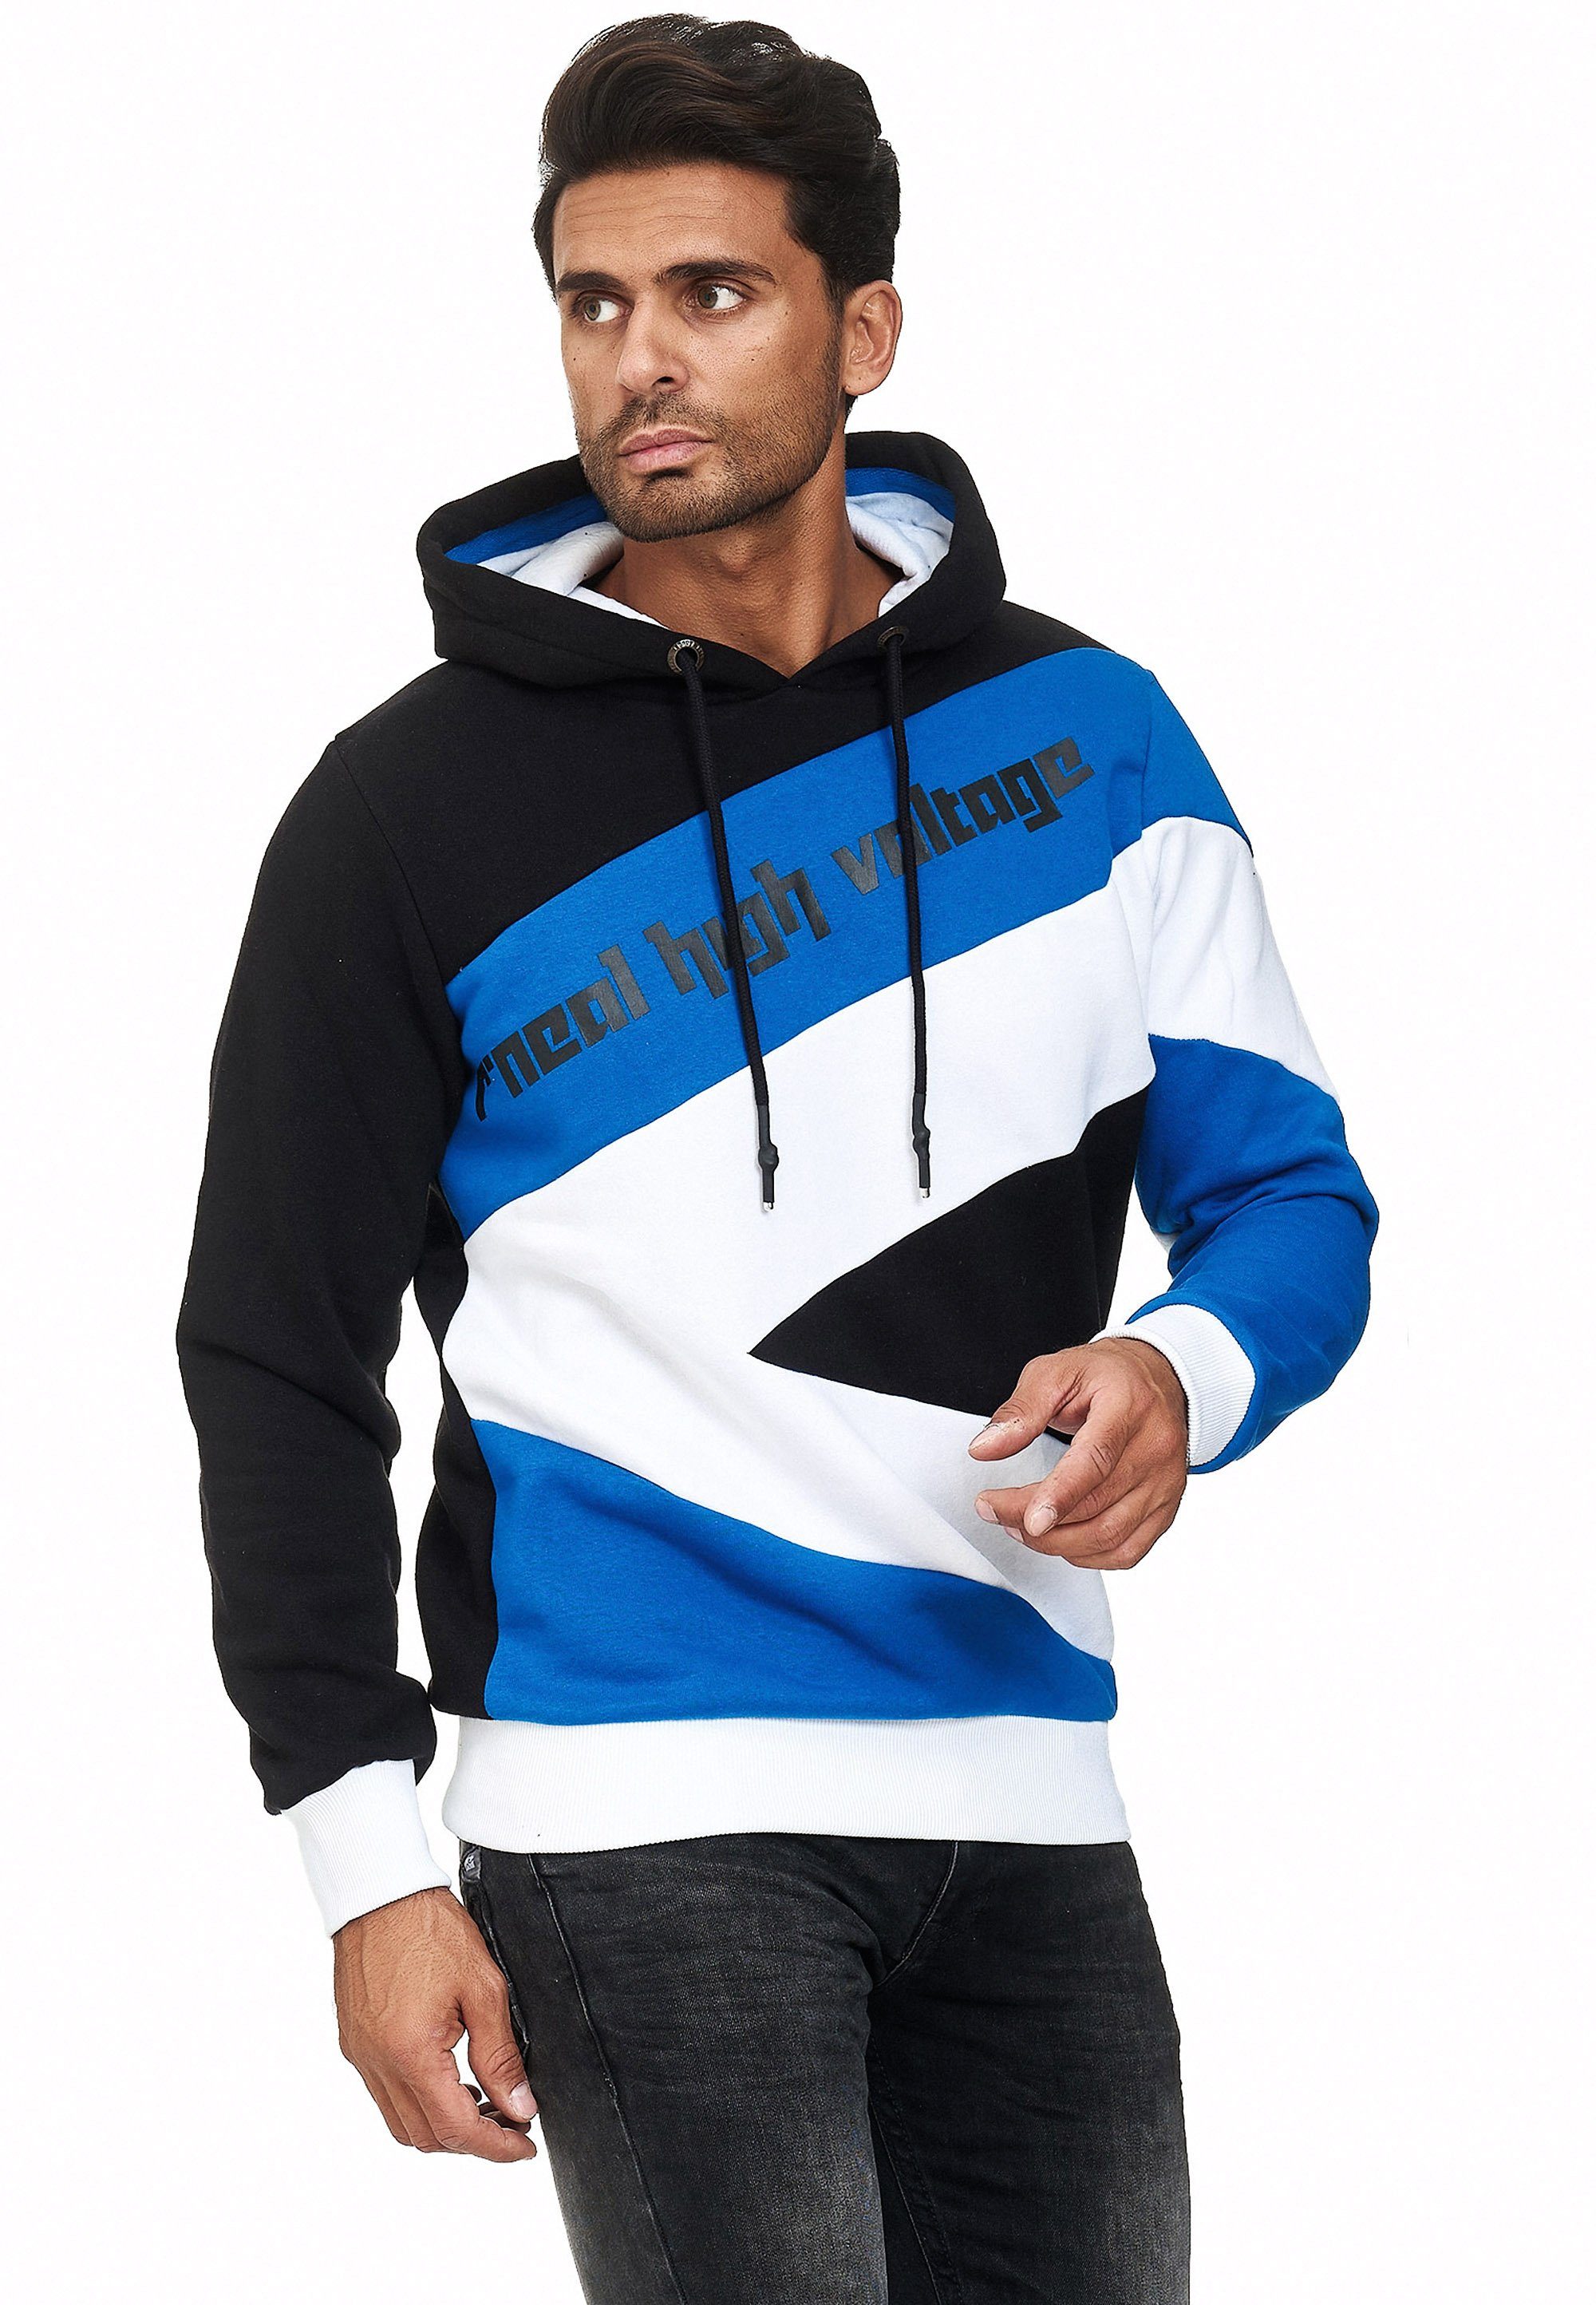 Neal sportlichem Kapuzensweatshirt in Rusty Design schwarz-blau